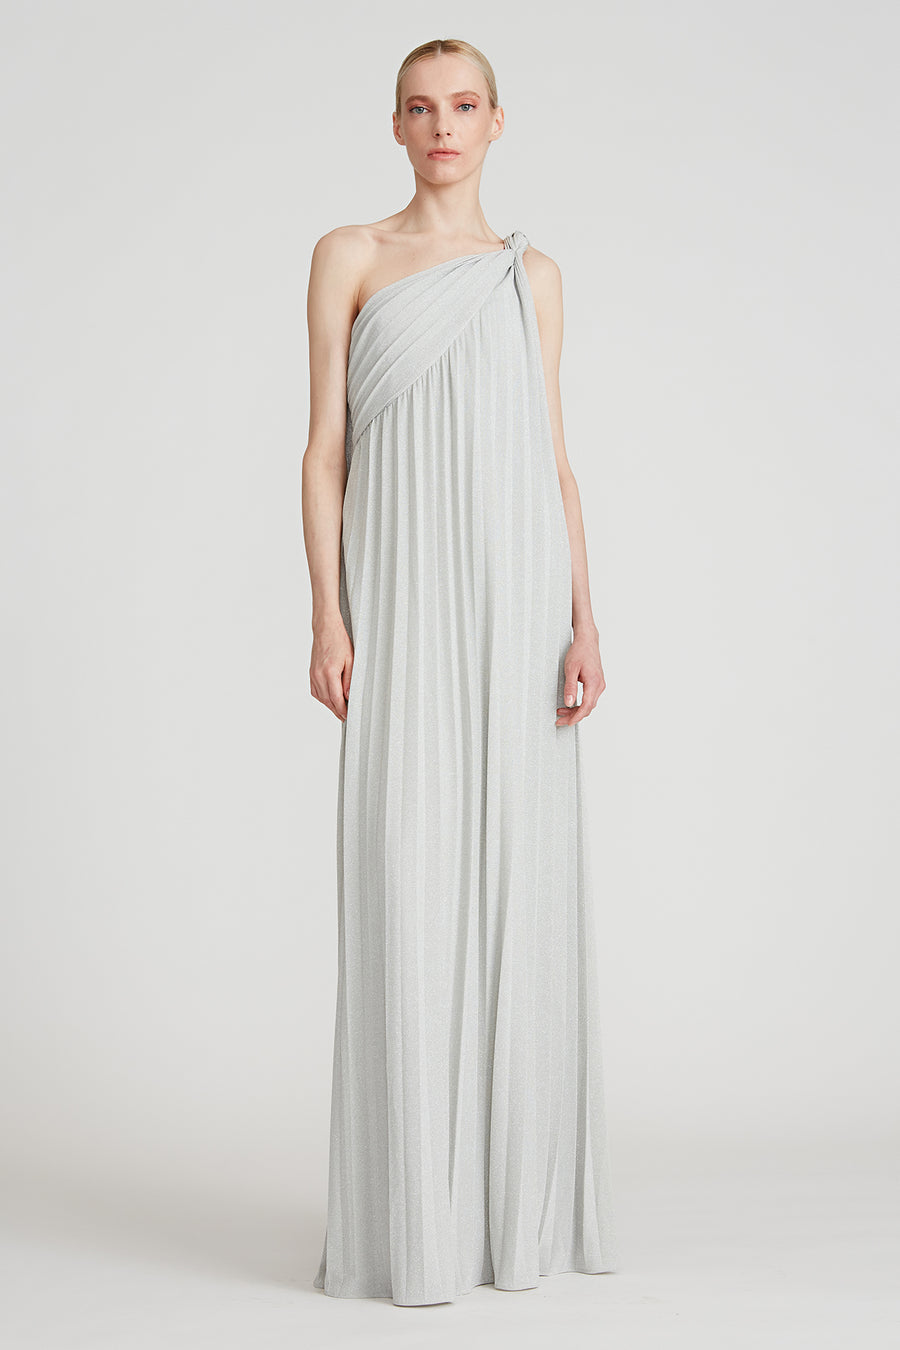 Halston - Priya Knit Pleated Gown - Silver